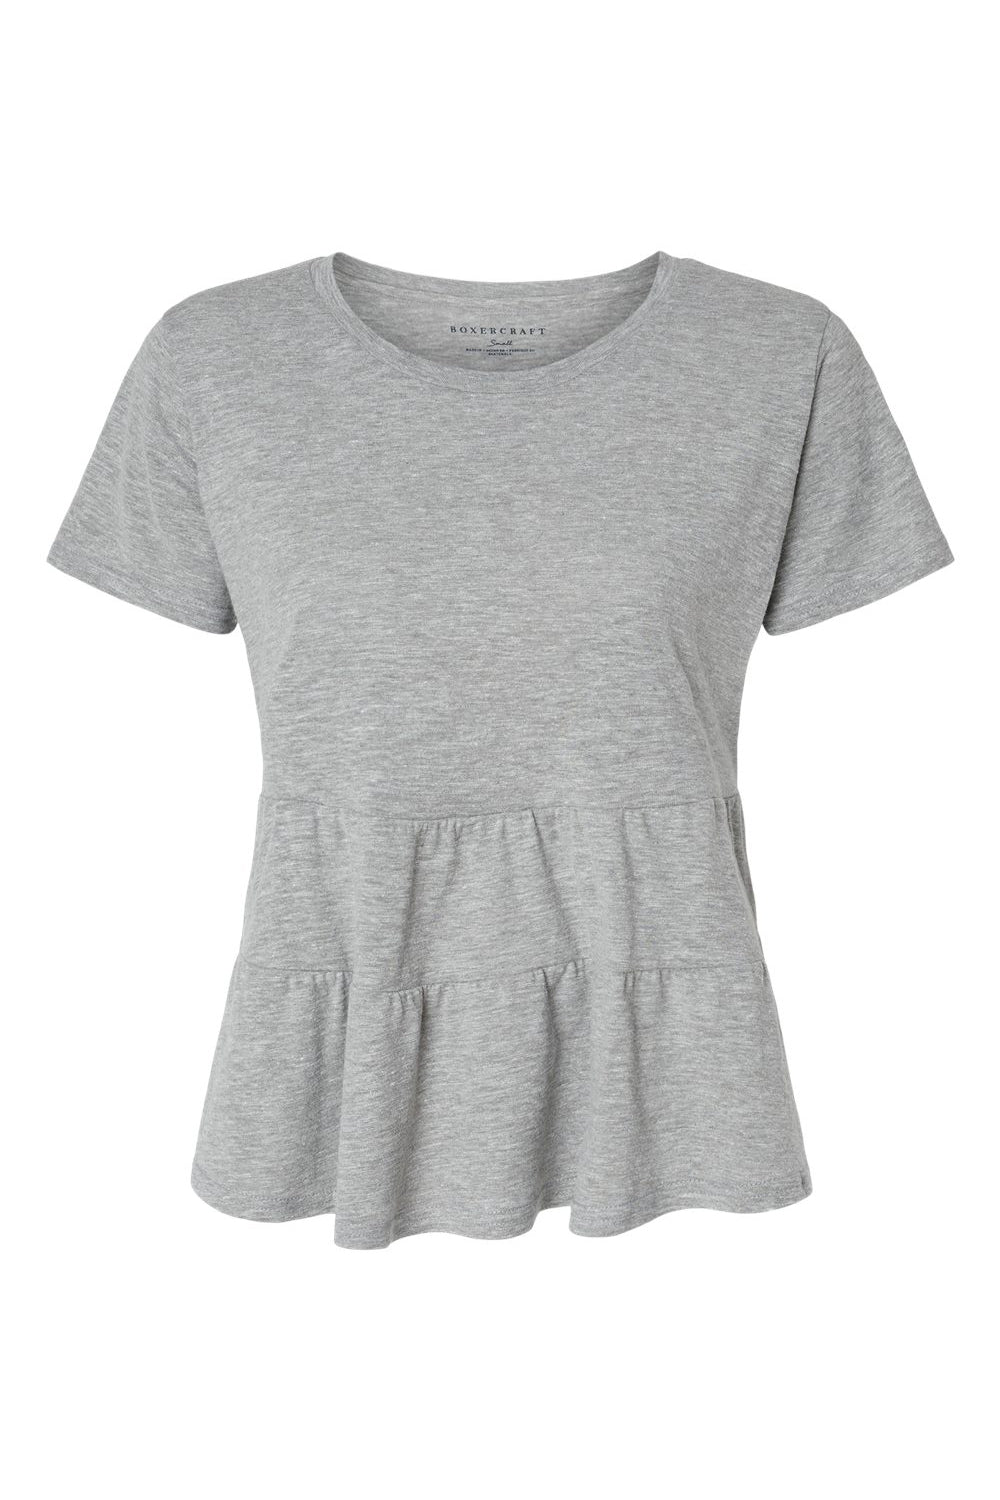 Boxercraft BW2401 Womens Willow Short Sleeve Crewneck T-Shirt Heather Oxford Grey Flat Front